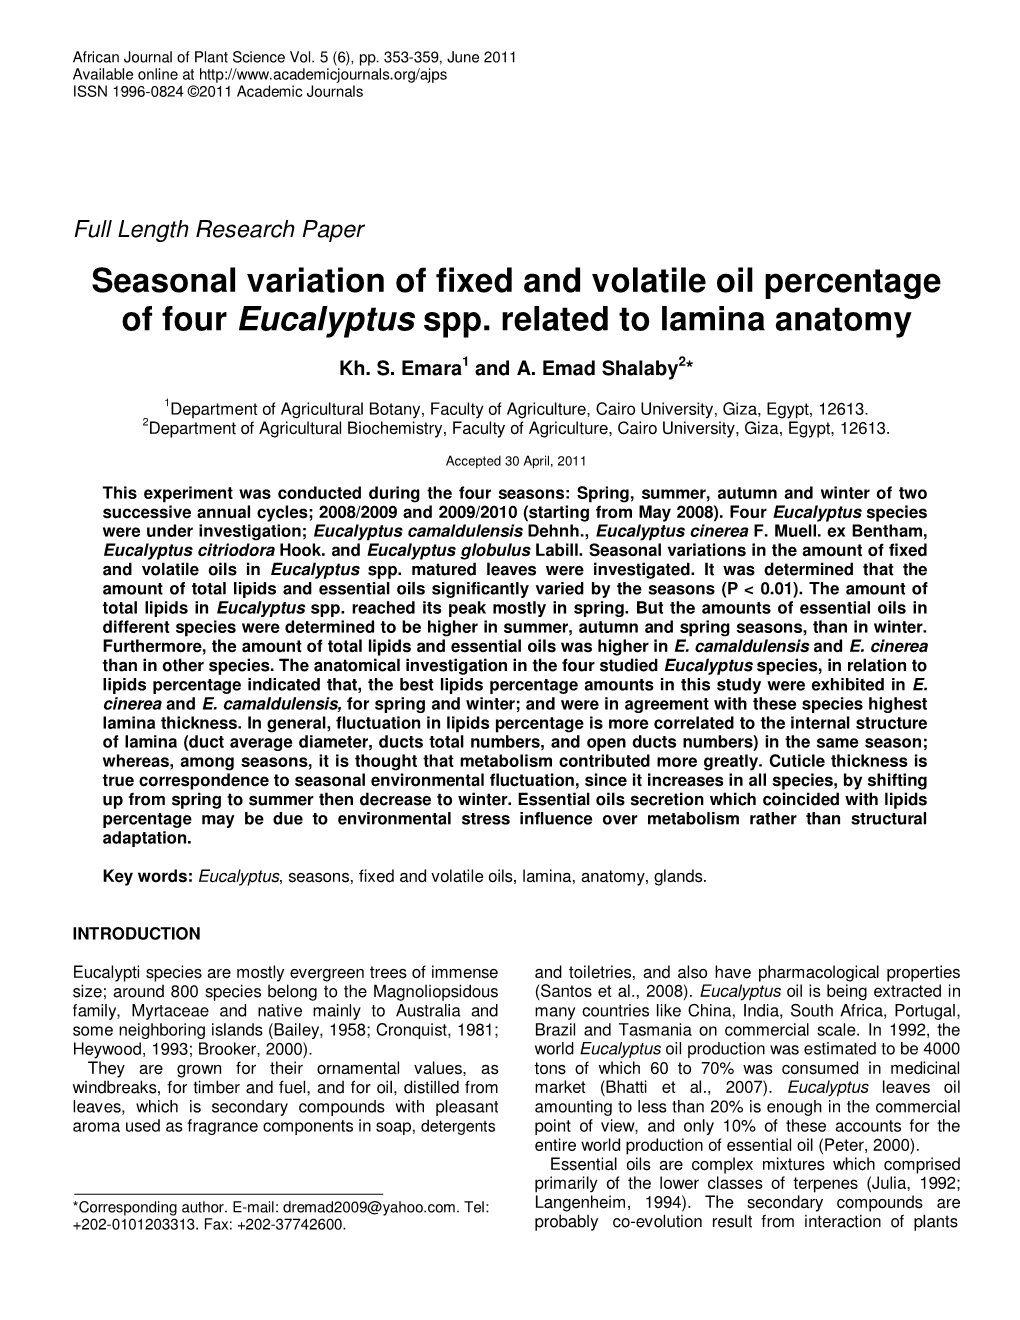 Seasonal Variation of Fixed and Volatile Oil Percentage of Four Eucalyptus Spp